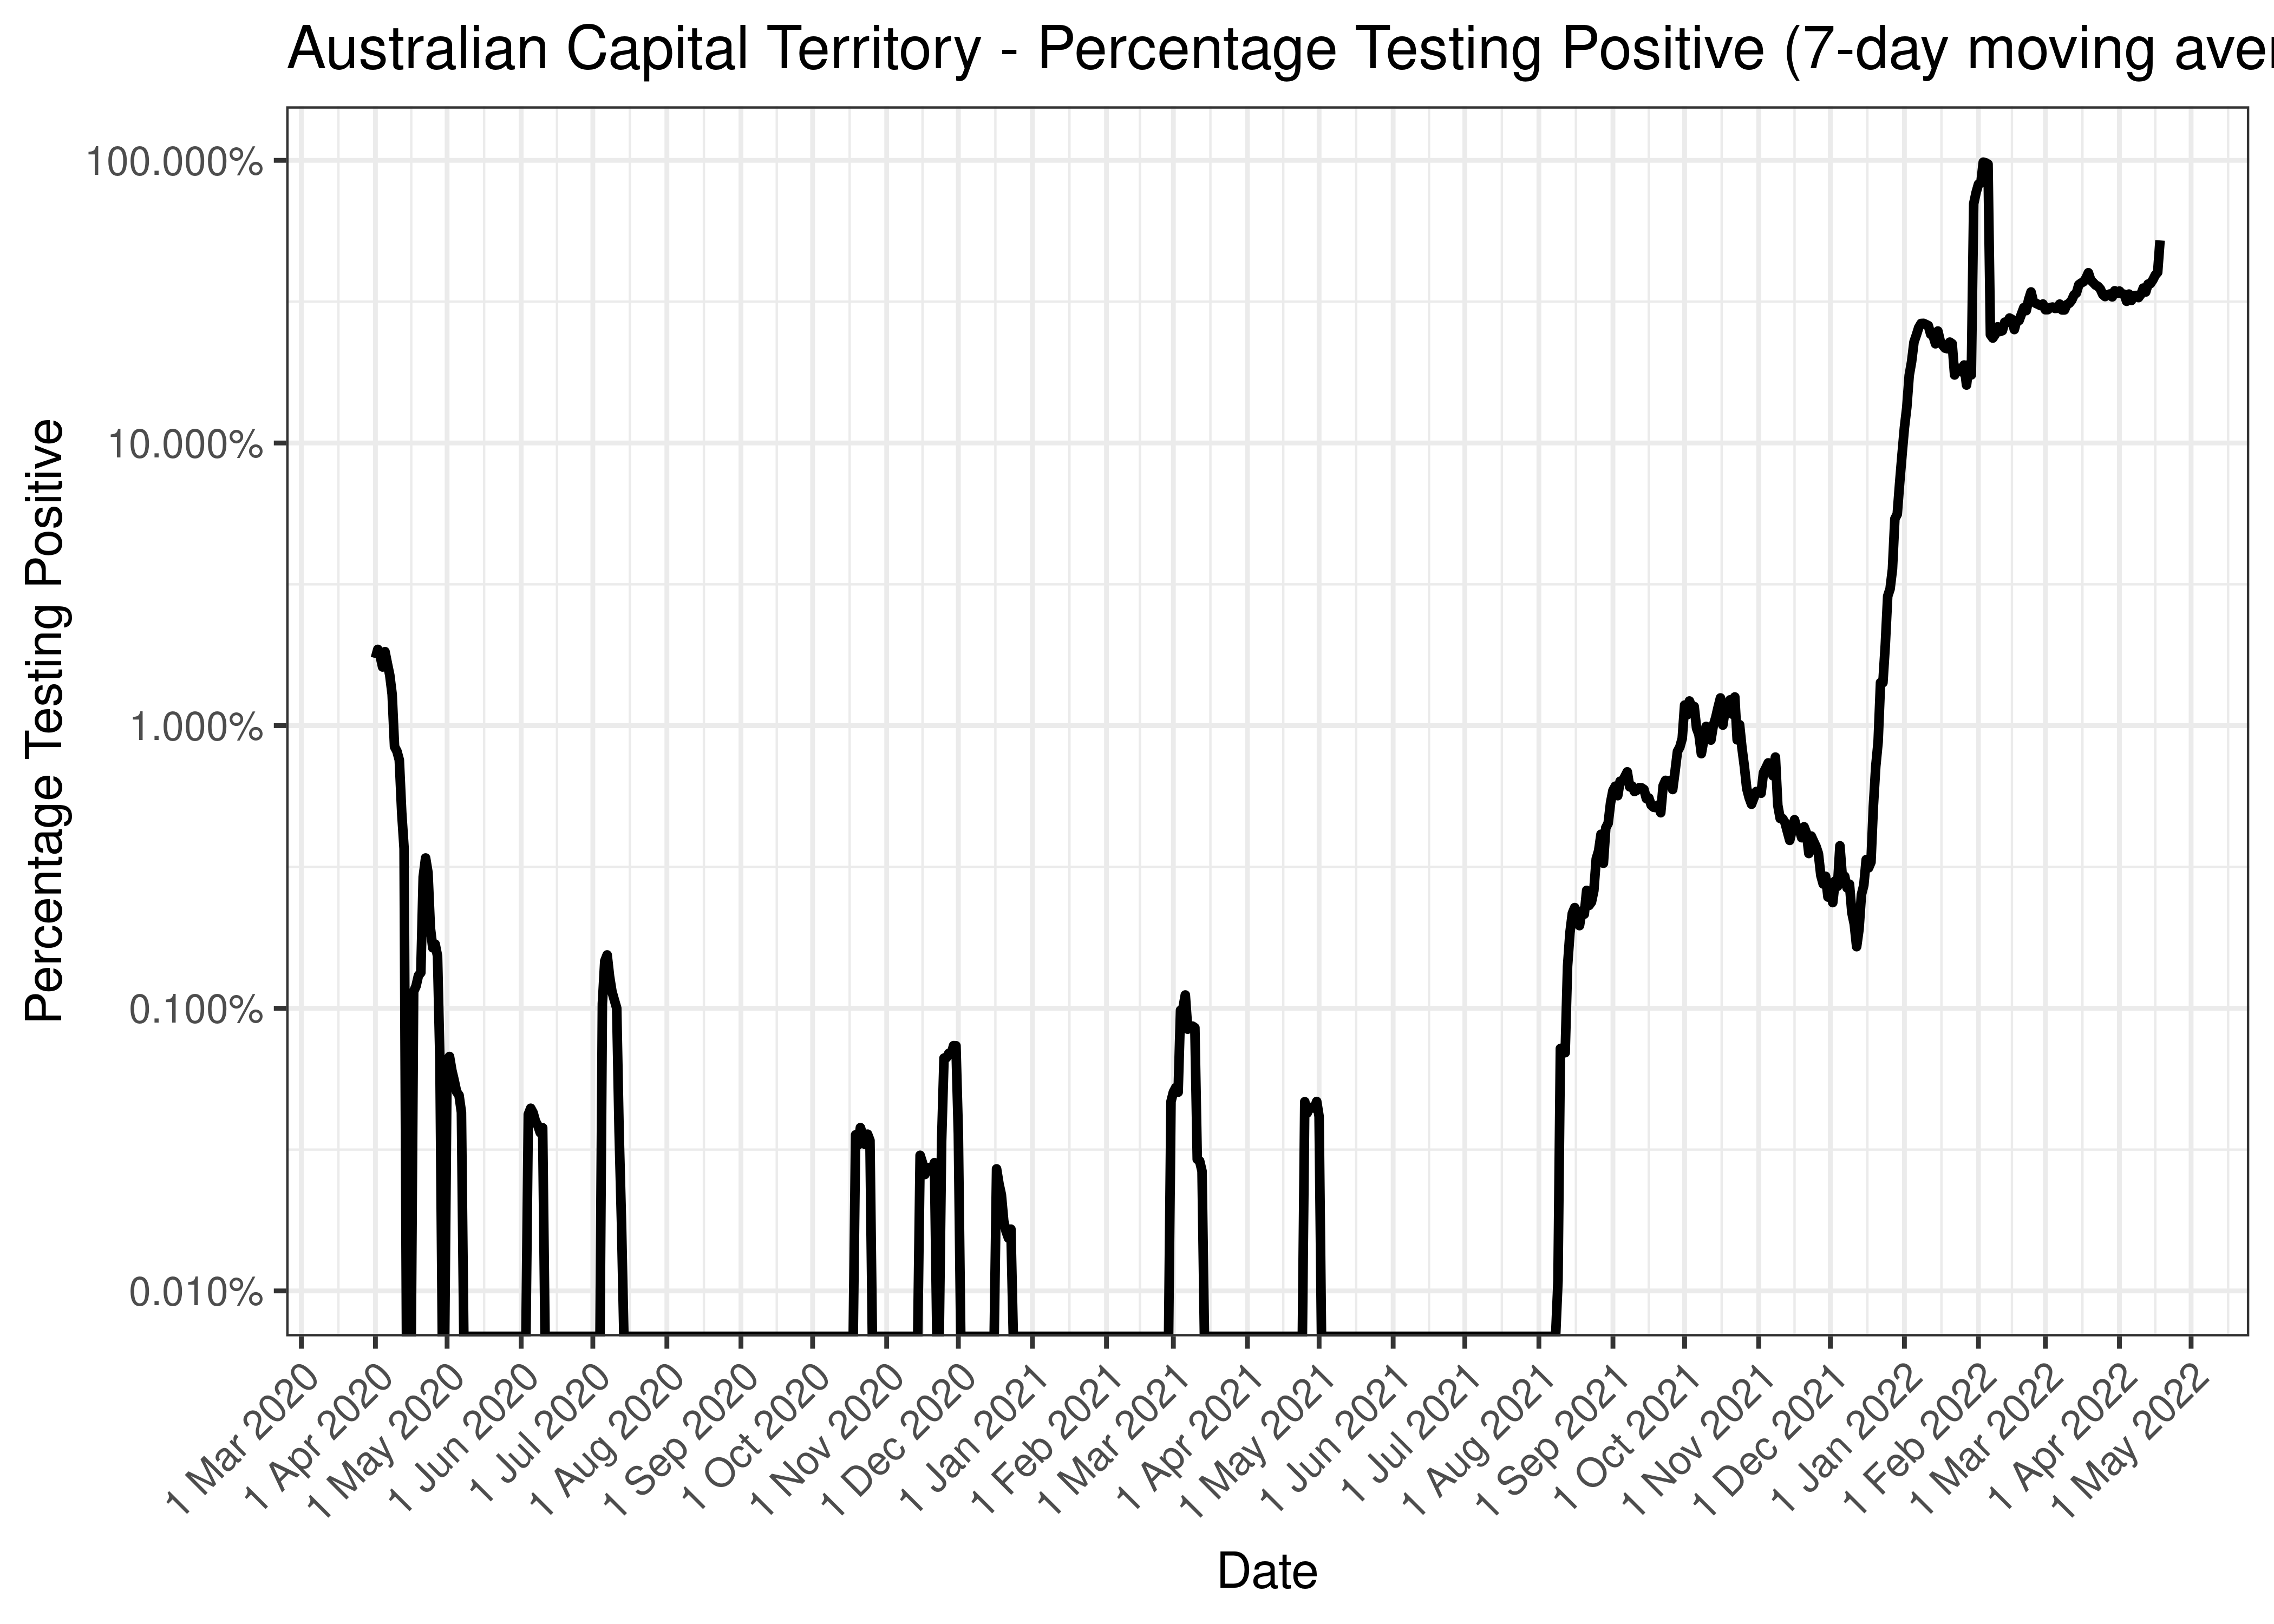 Australian Capital Territory - Percentage Testing Positive (7-day moving average)